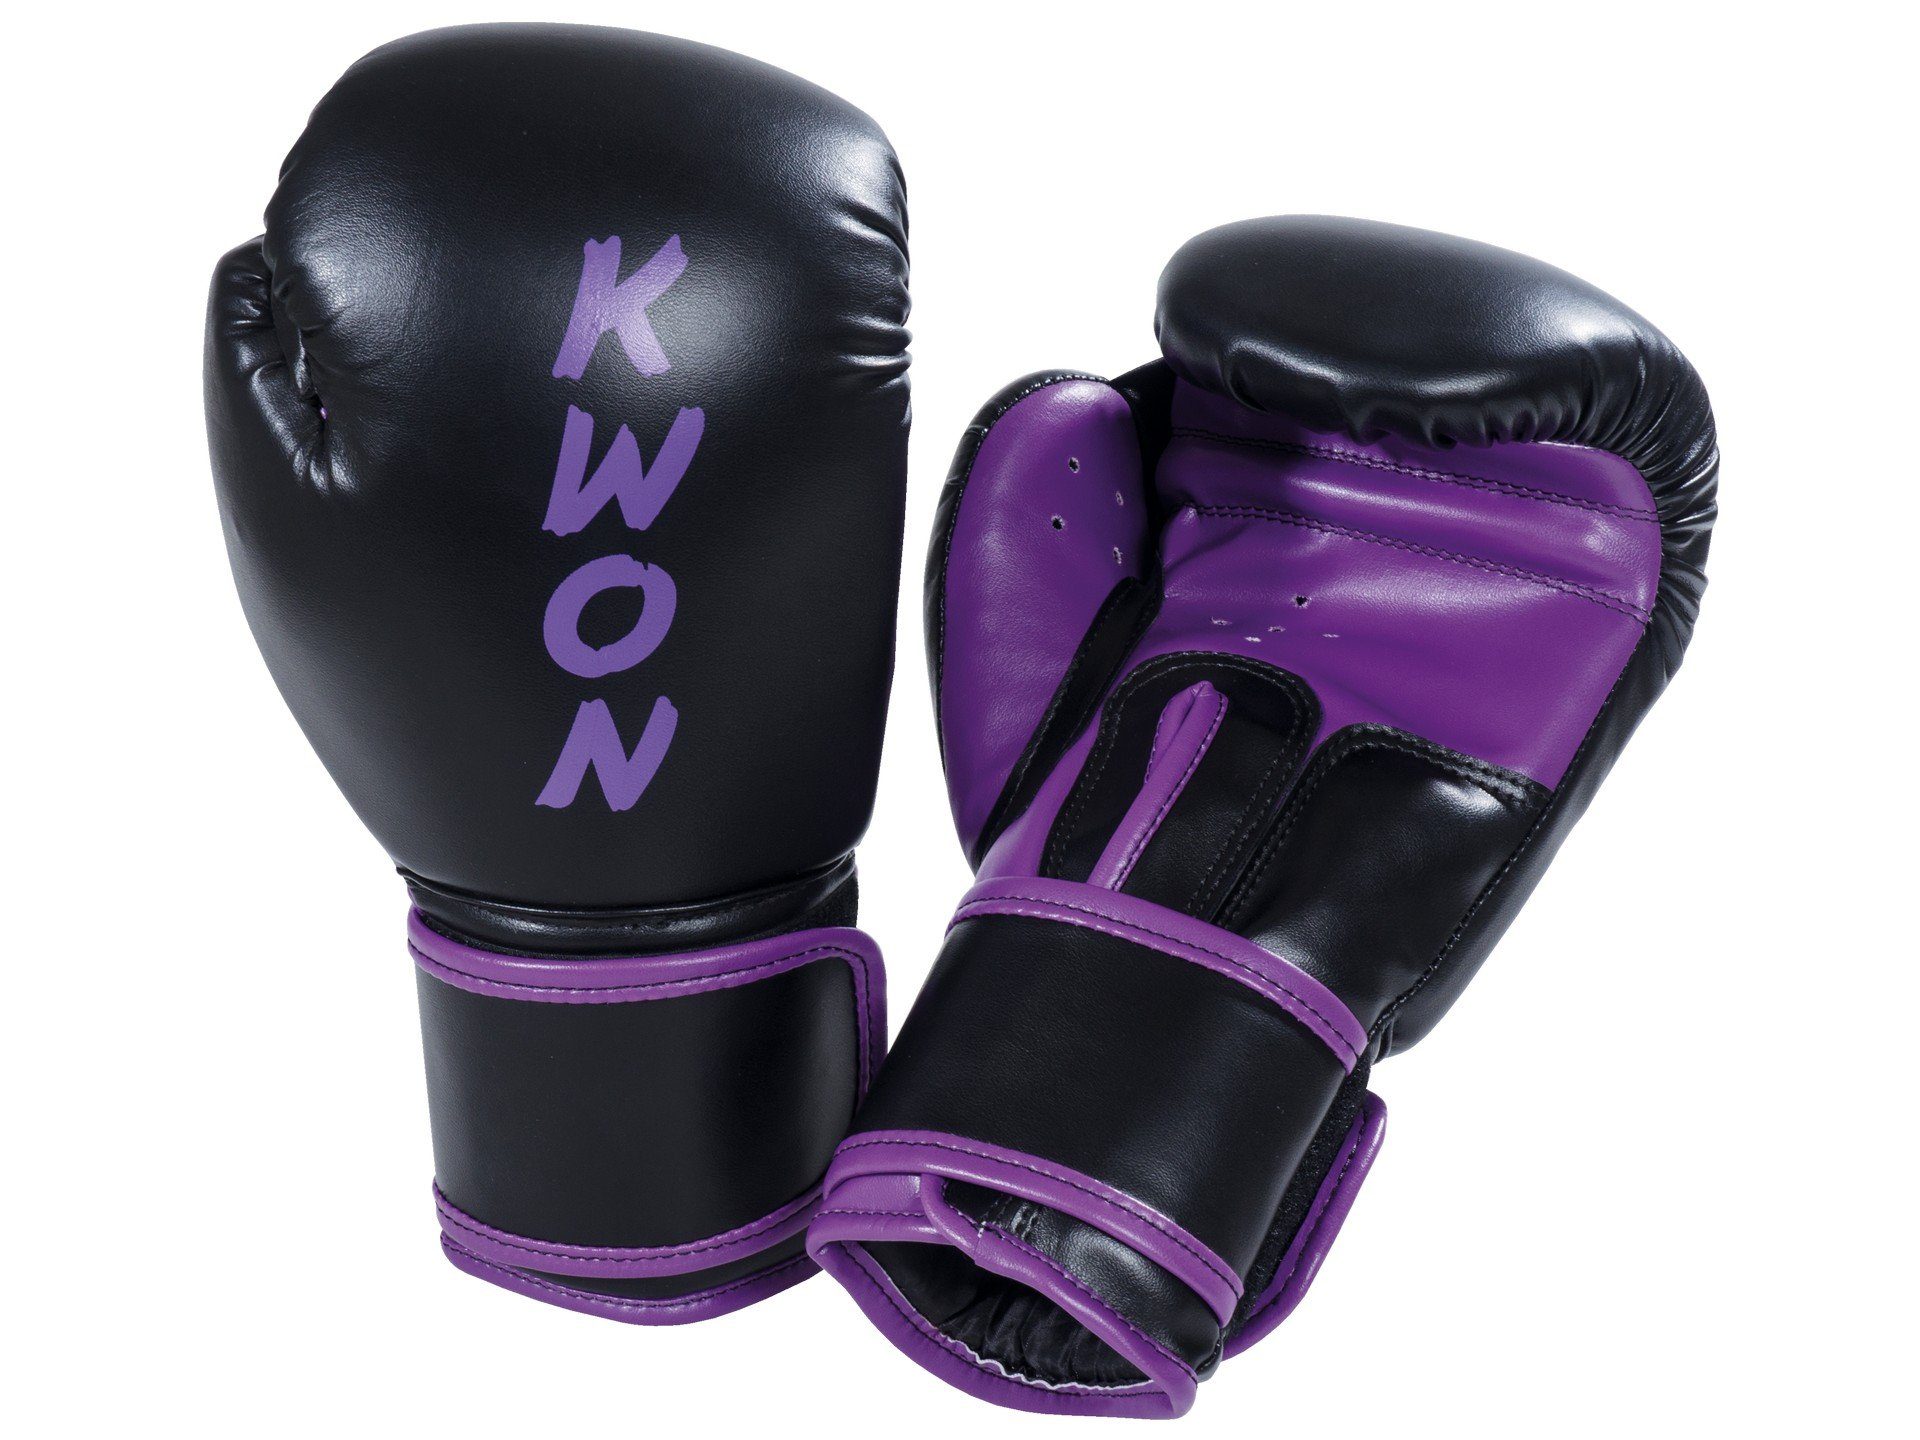 Box-Handschuhe Unzen 8 Fortgeschrittene MMA Boxhandschuhe (Paar), - Boxen Steko Kickboxen Wettkampf Training Einsteiger, KWON und 10